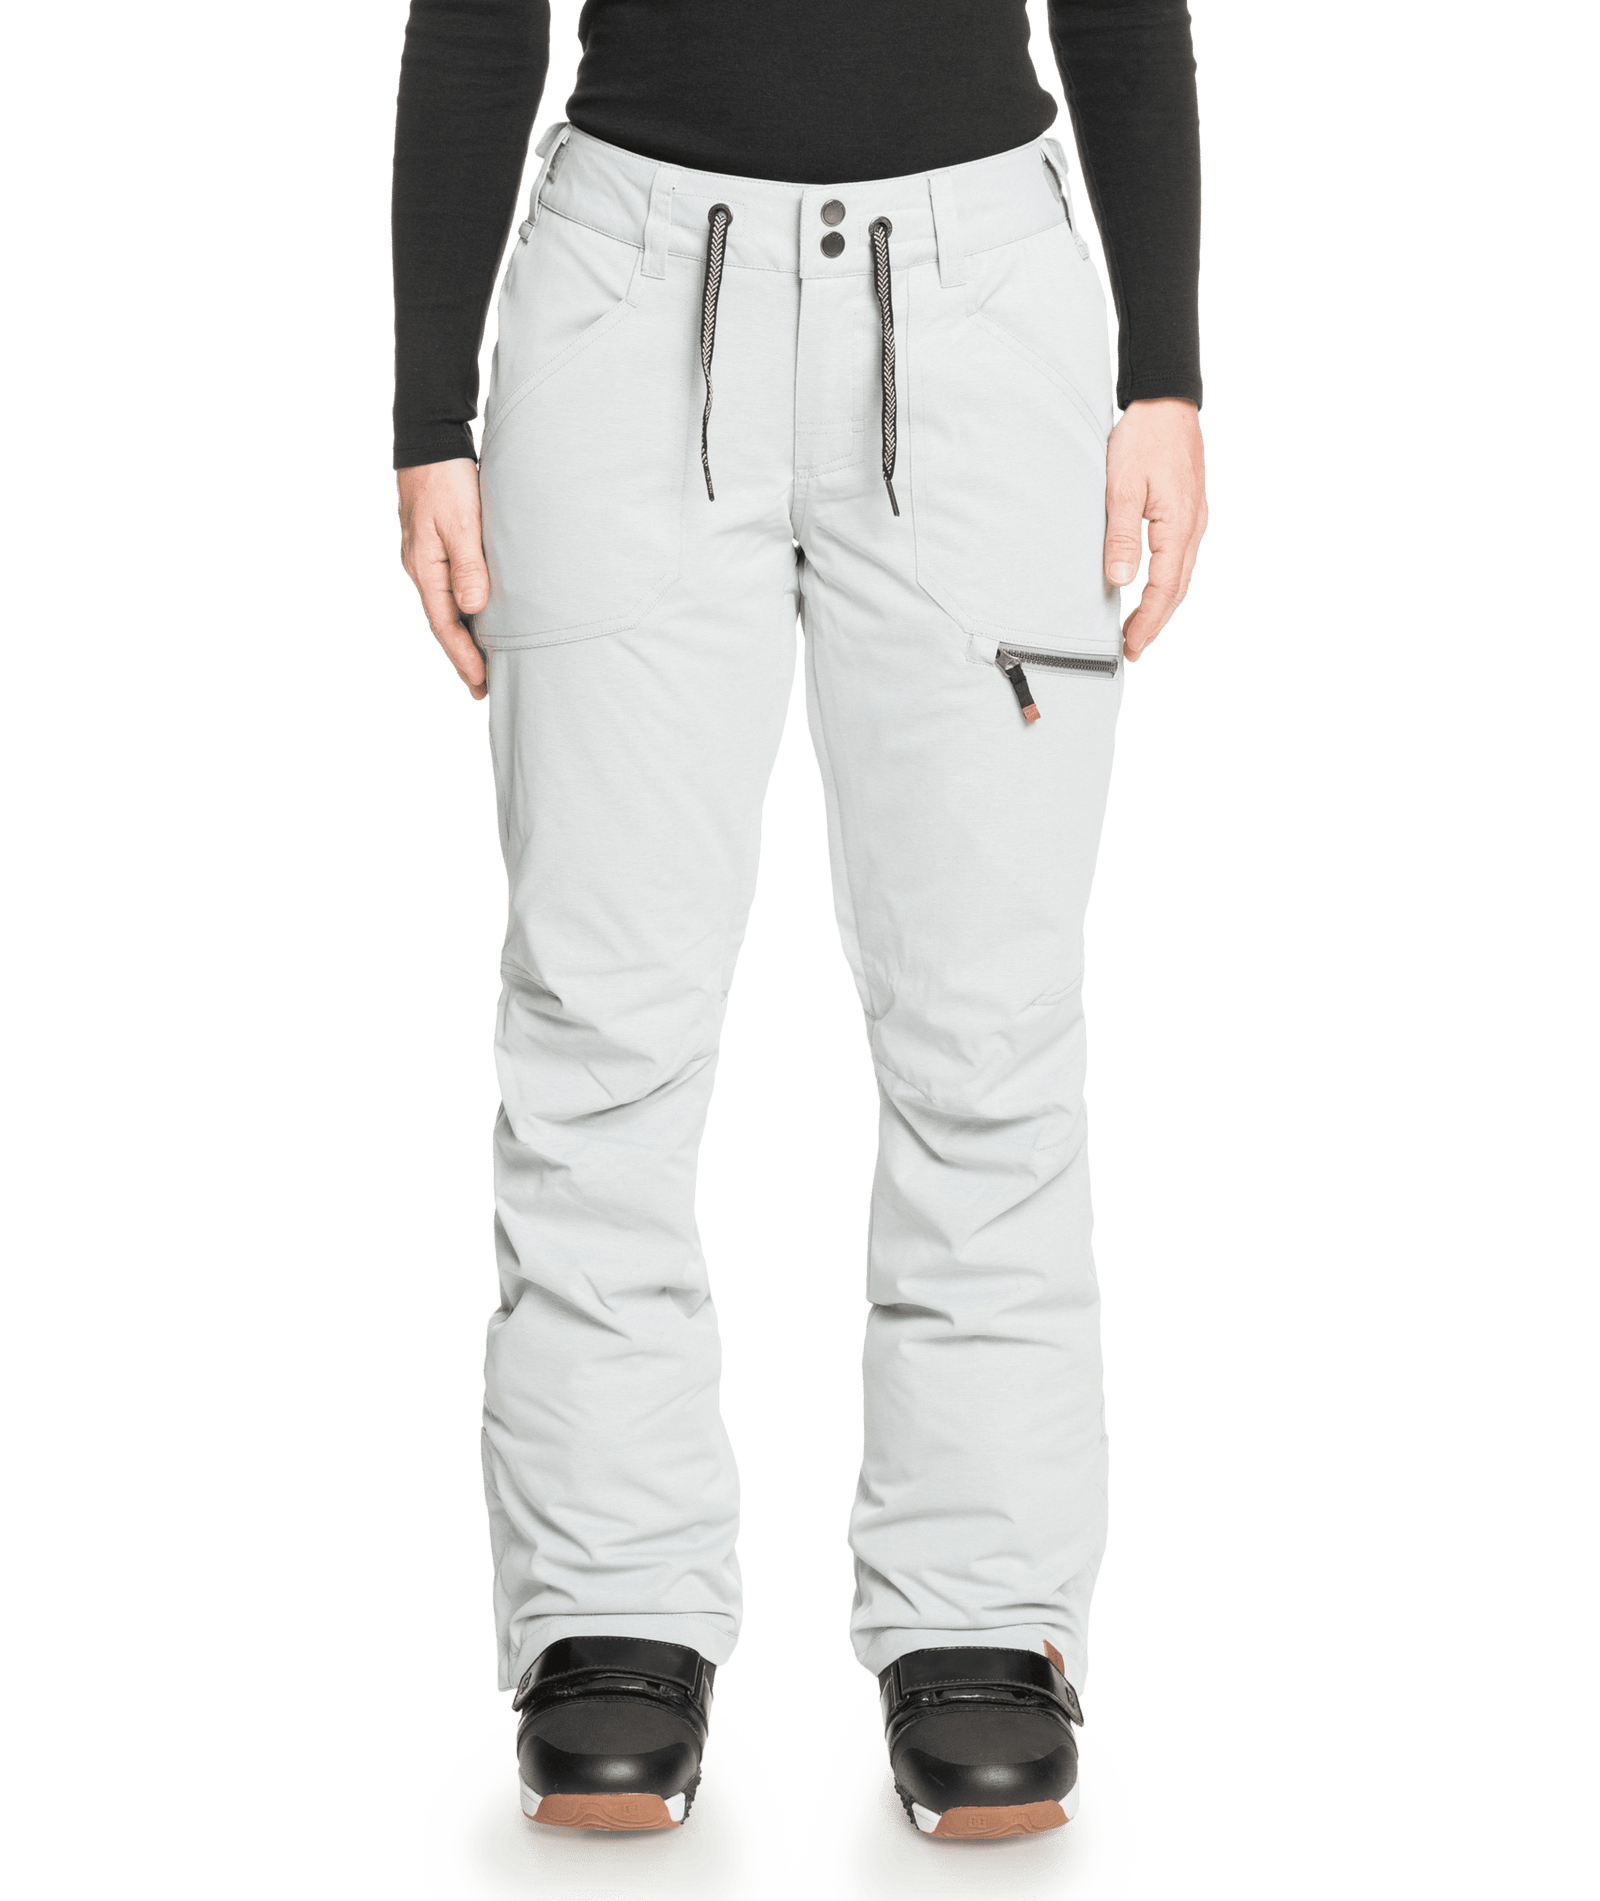 Brand New Womens 2020 Roxy Creek Snow Pants Bright White